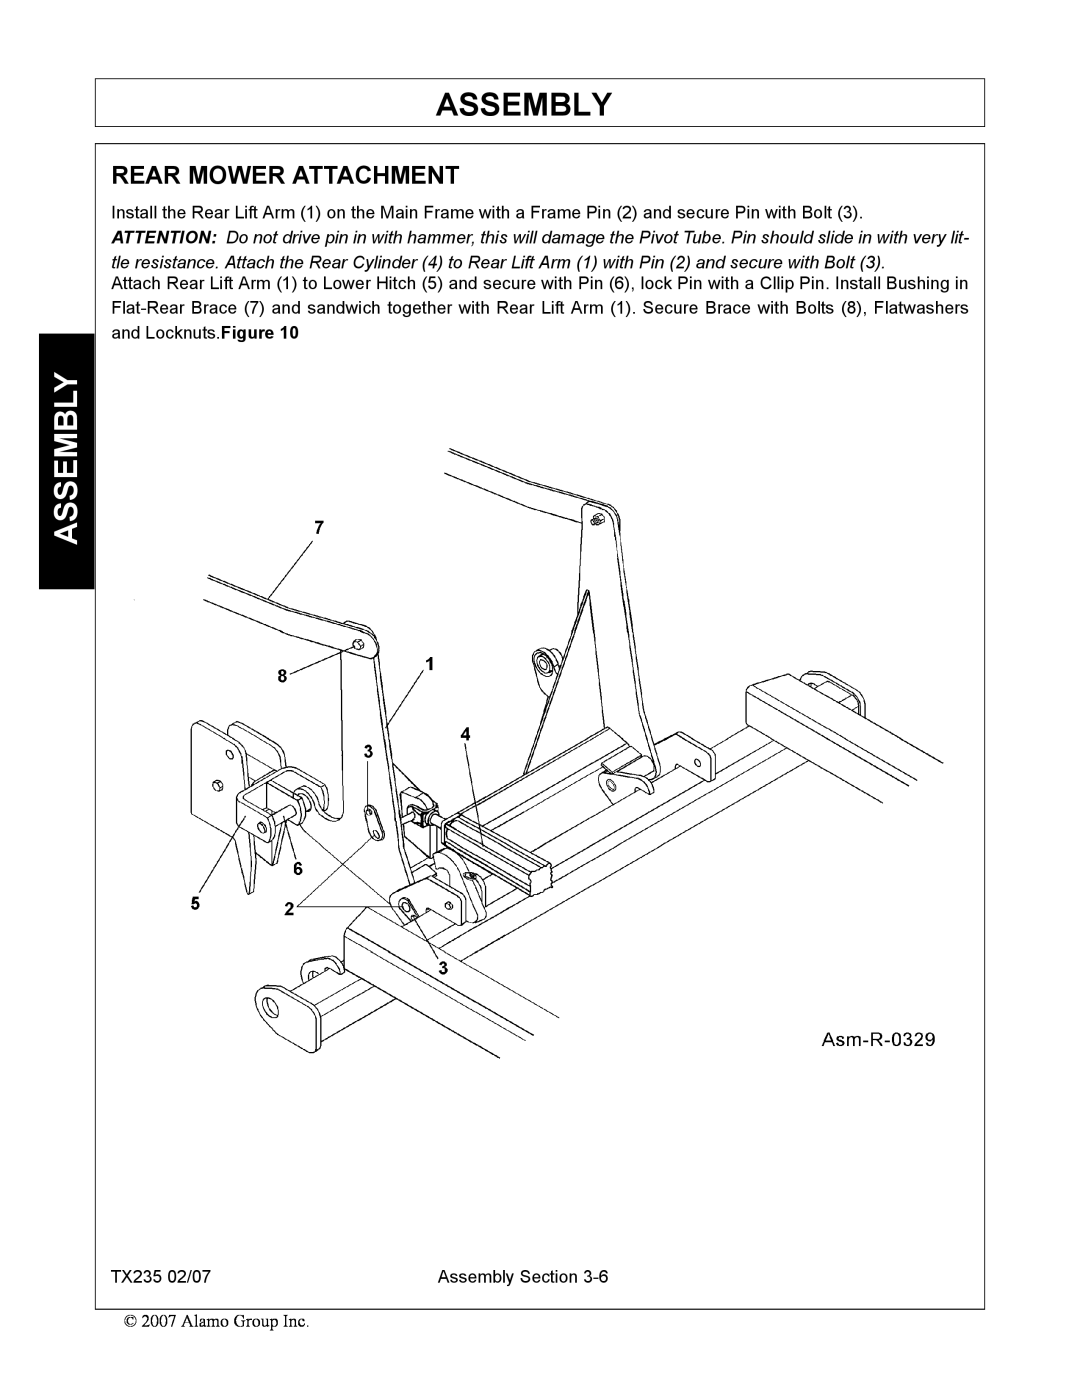 Alamo TX235 manual Rear Mower Attachment, Assembly 